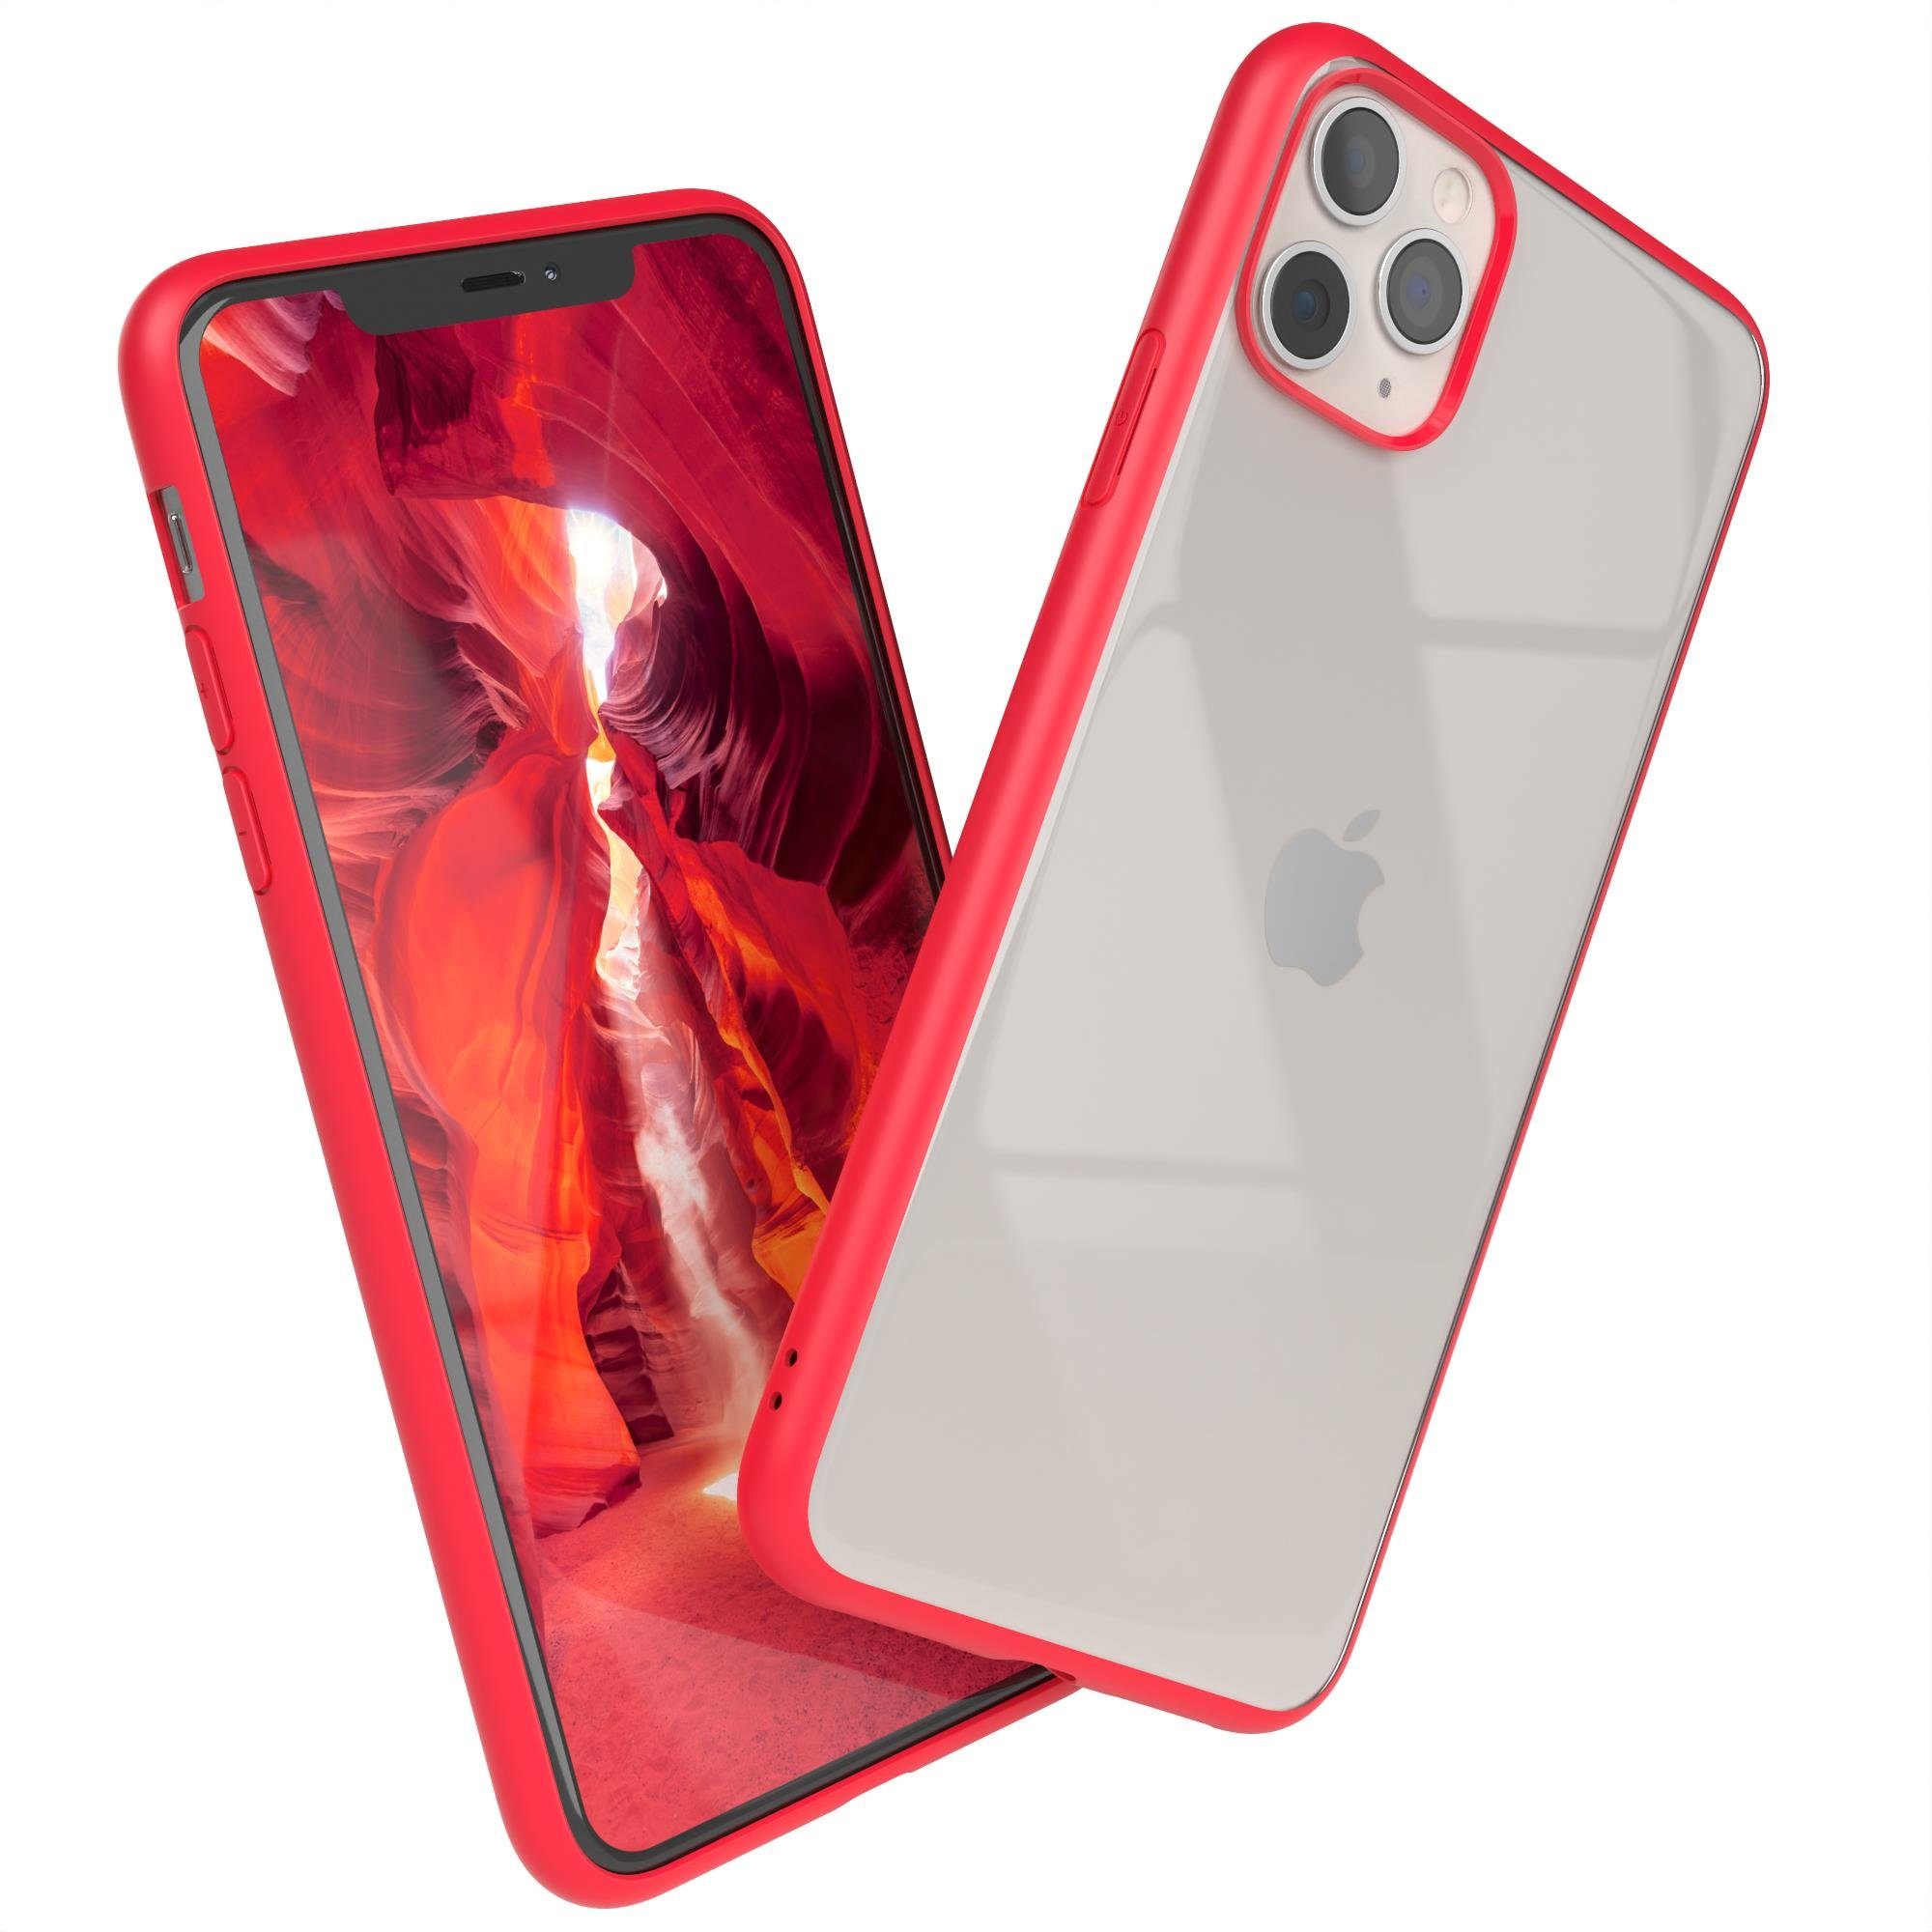 EAZY CASE Handyhülle Bumper Case für Apple iPhone 11 Pro Max 6,5 Zoll,  Hülle Transparent Backcover kratzfest Slim Cover Durchsichtig Rot